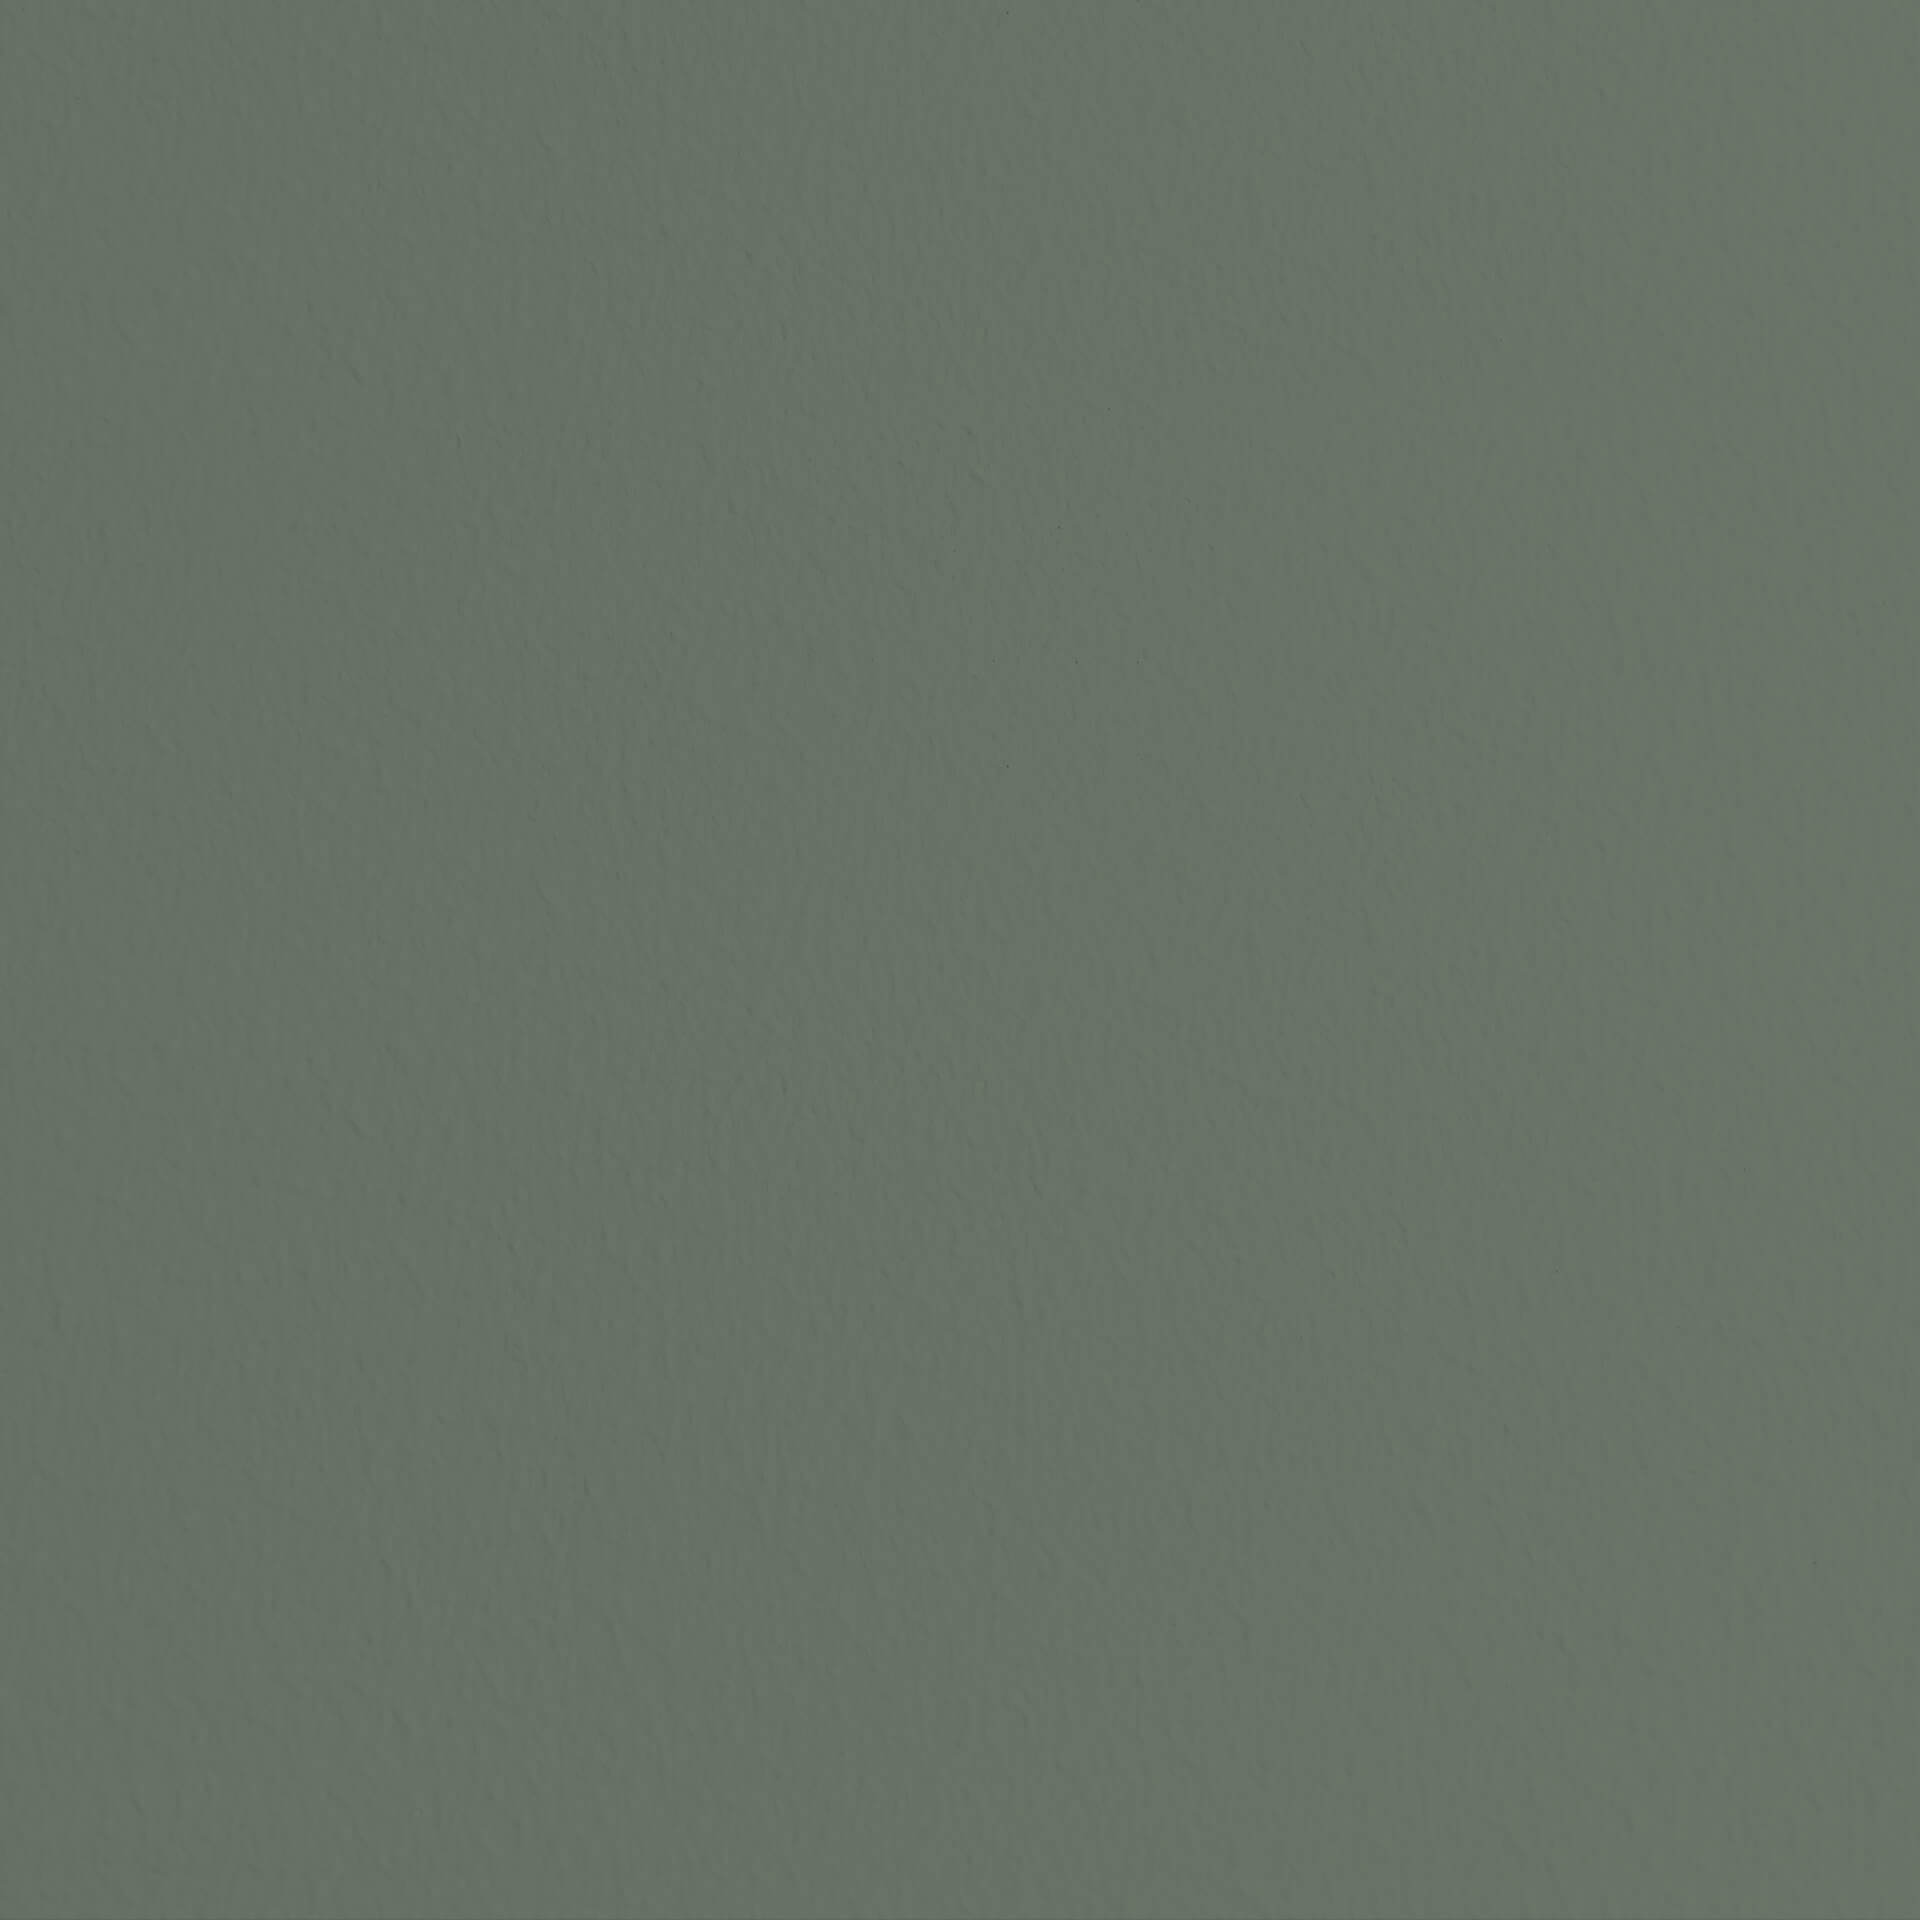 Mylands Myrtle Green No. 168 - Marble Matt Emulsion / Wandfarbe, 100ml